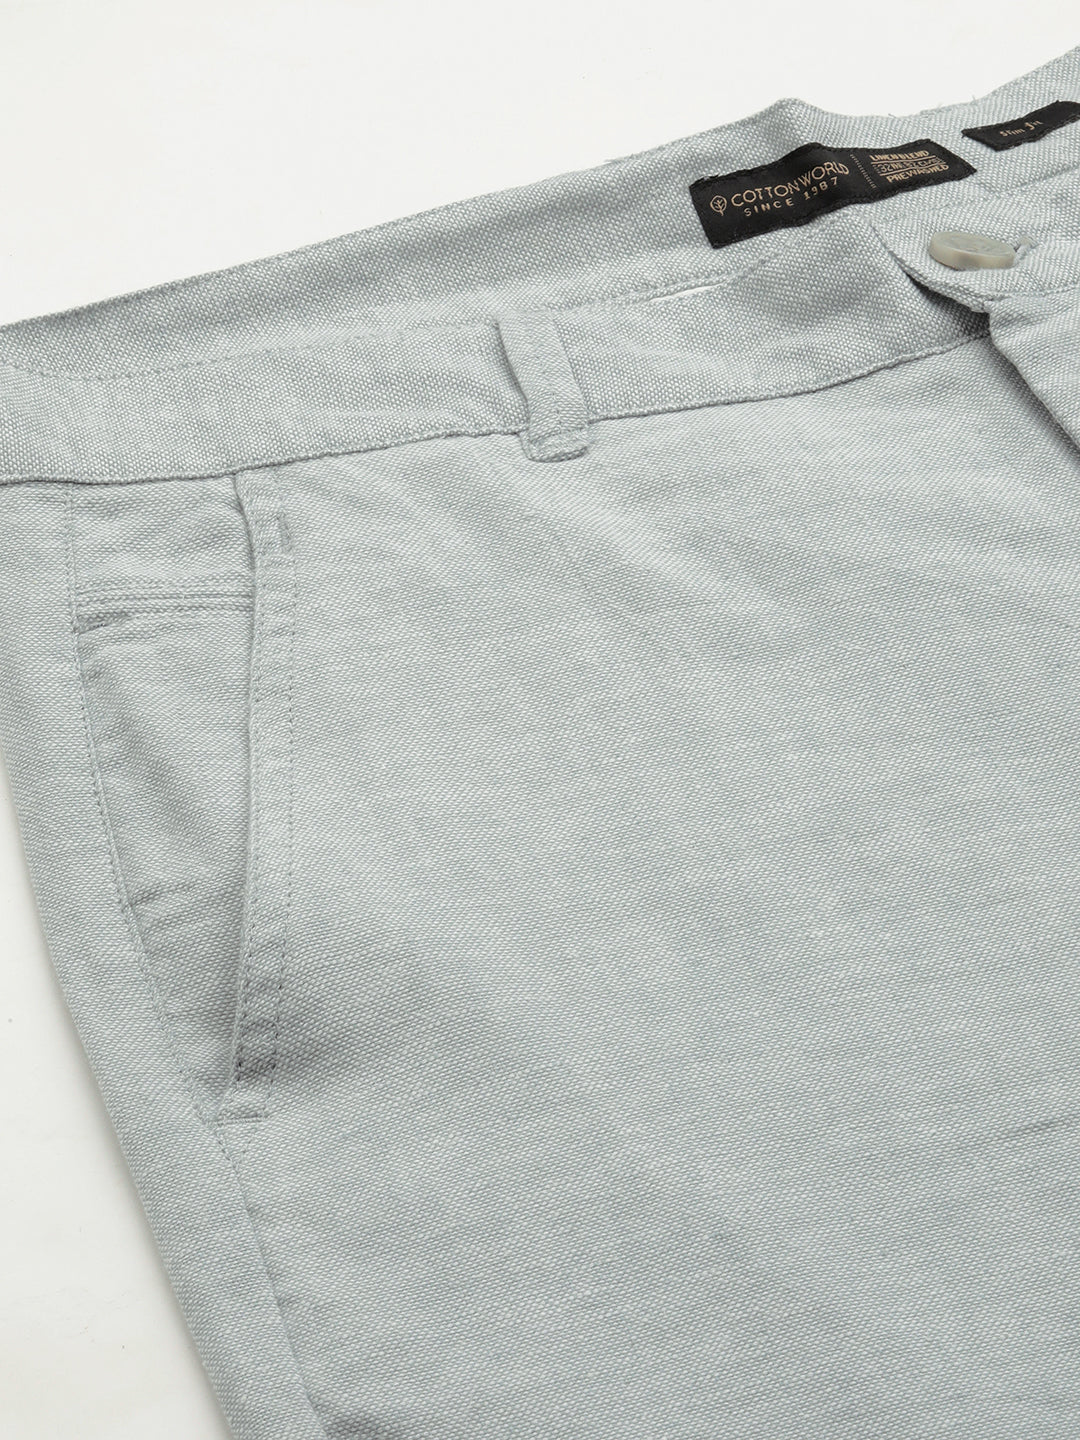 LEEy-world Pants for Men Men's Cotton Linen Beach Pants Loose Casual  Drawstring Wasit Slacks with Pocket Khaki,S - Walmart.com